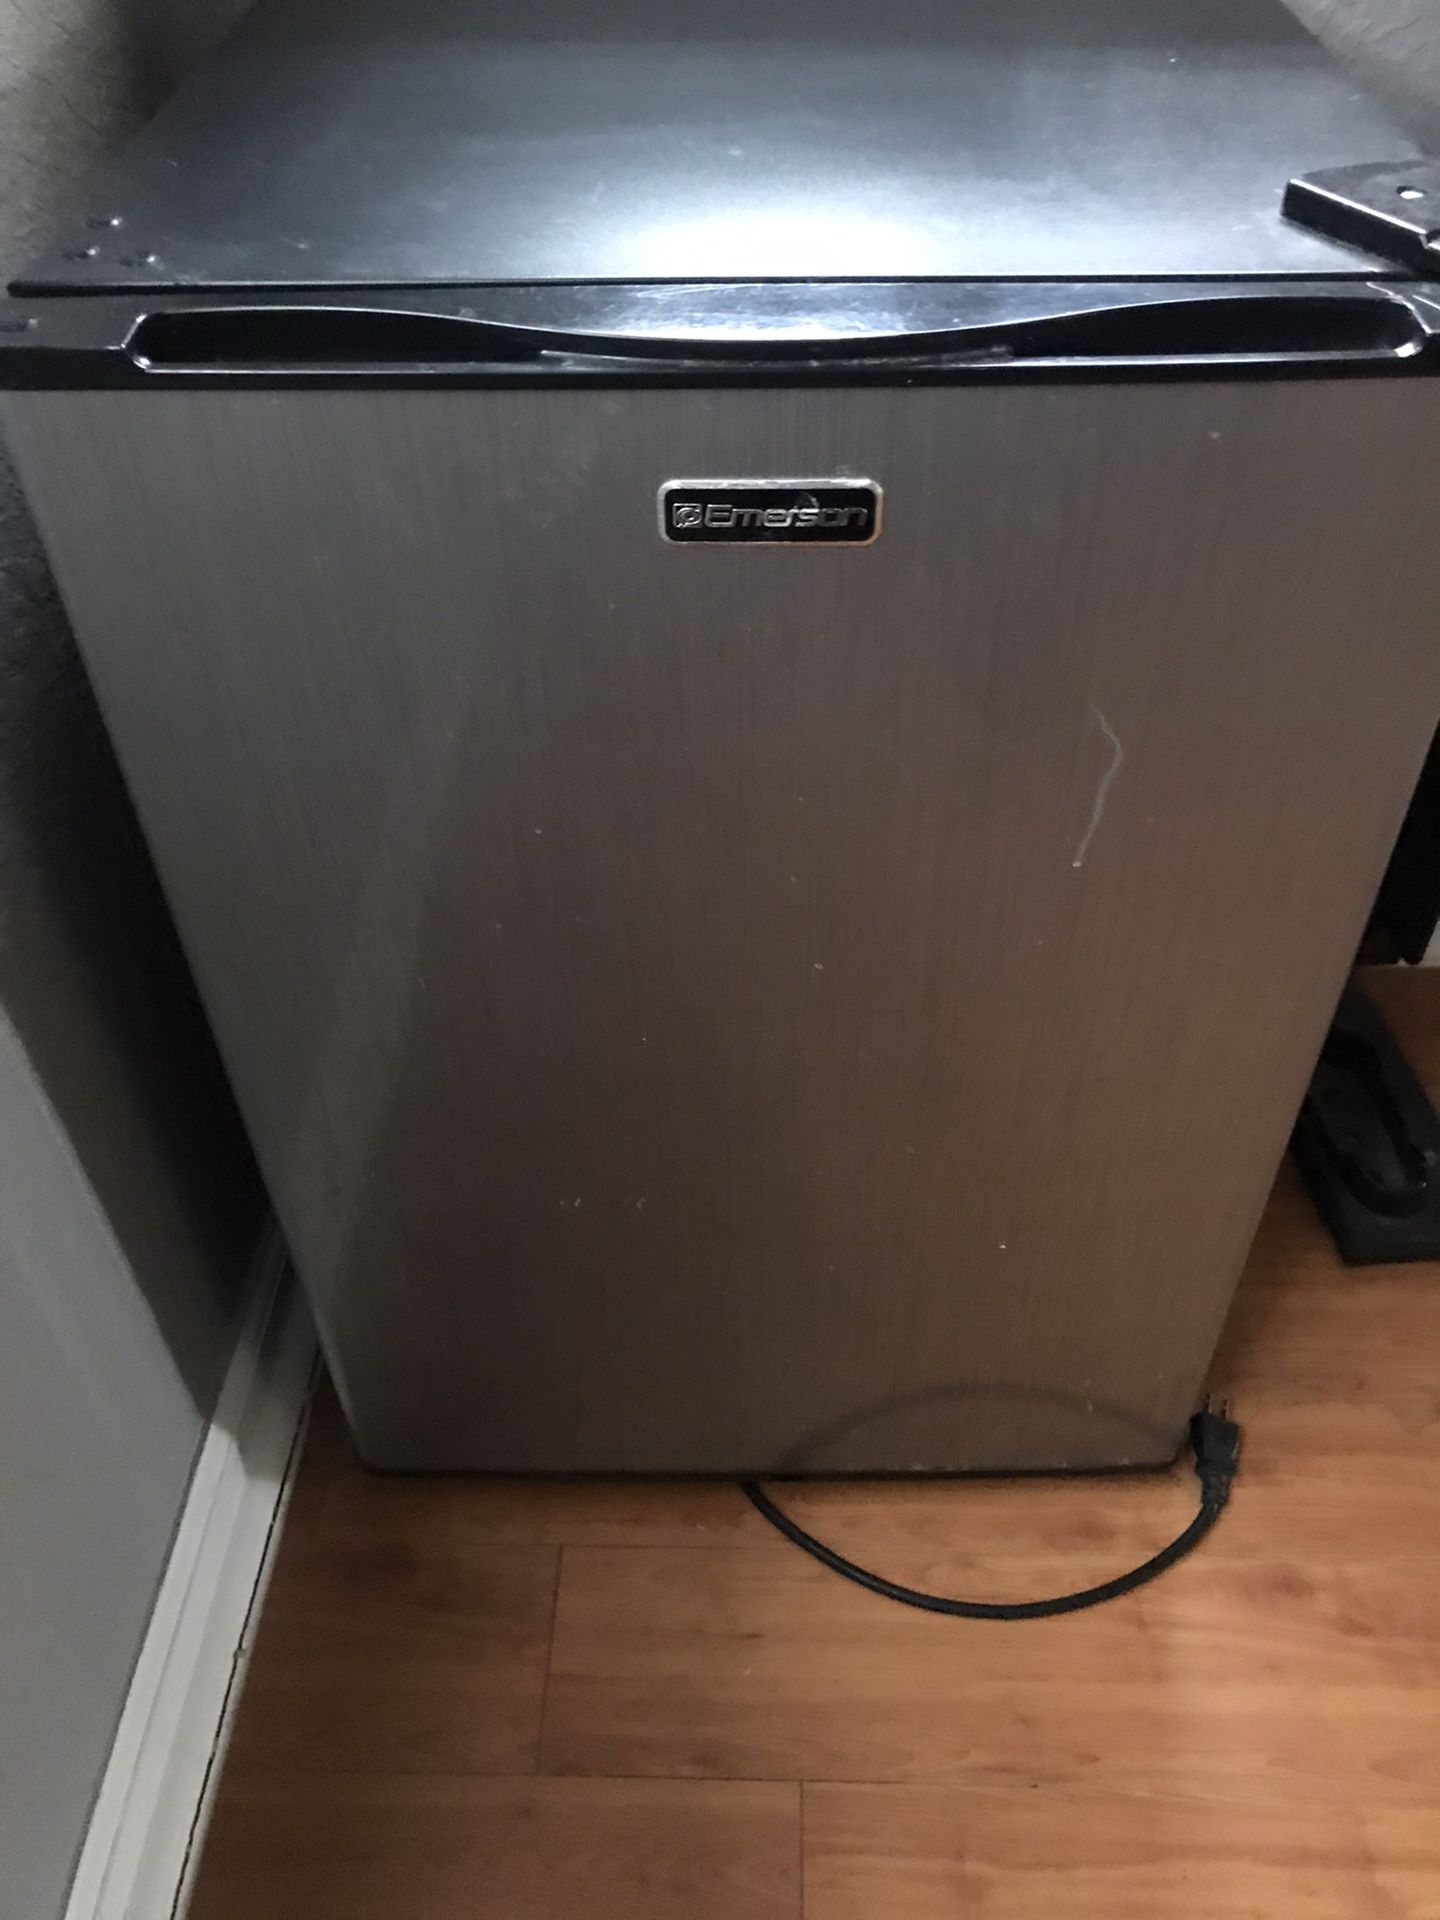 Emerson Mini fridge refrigerator with very small freezer